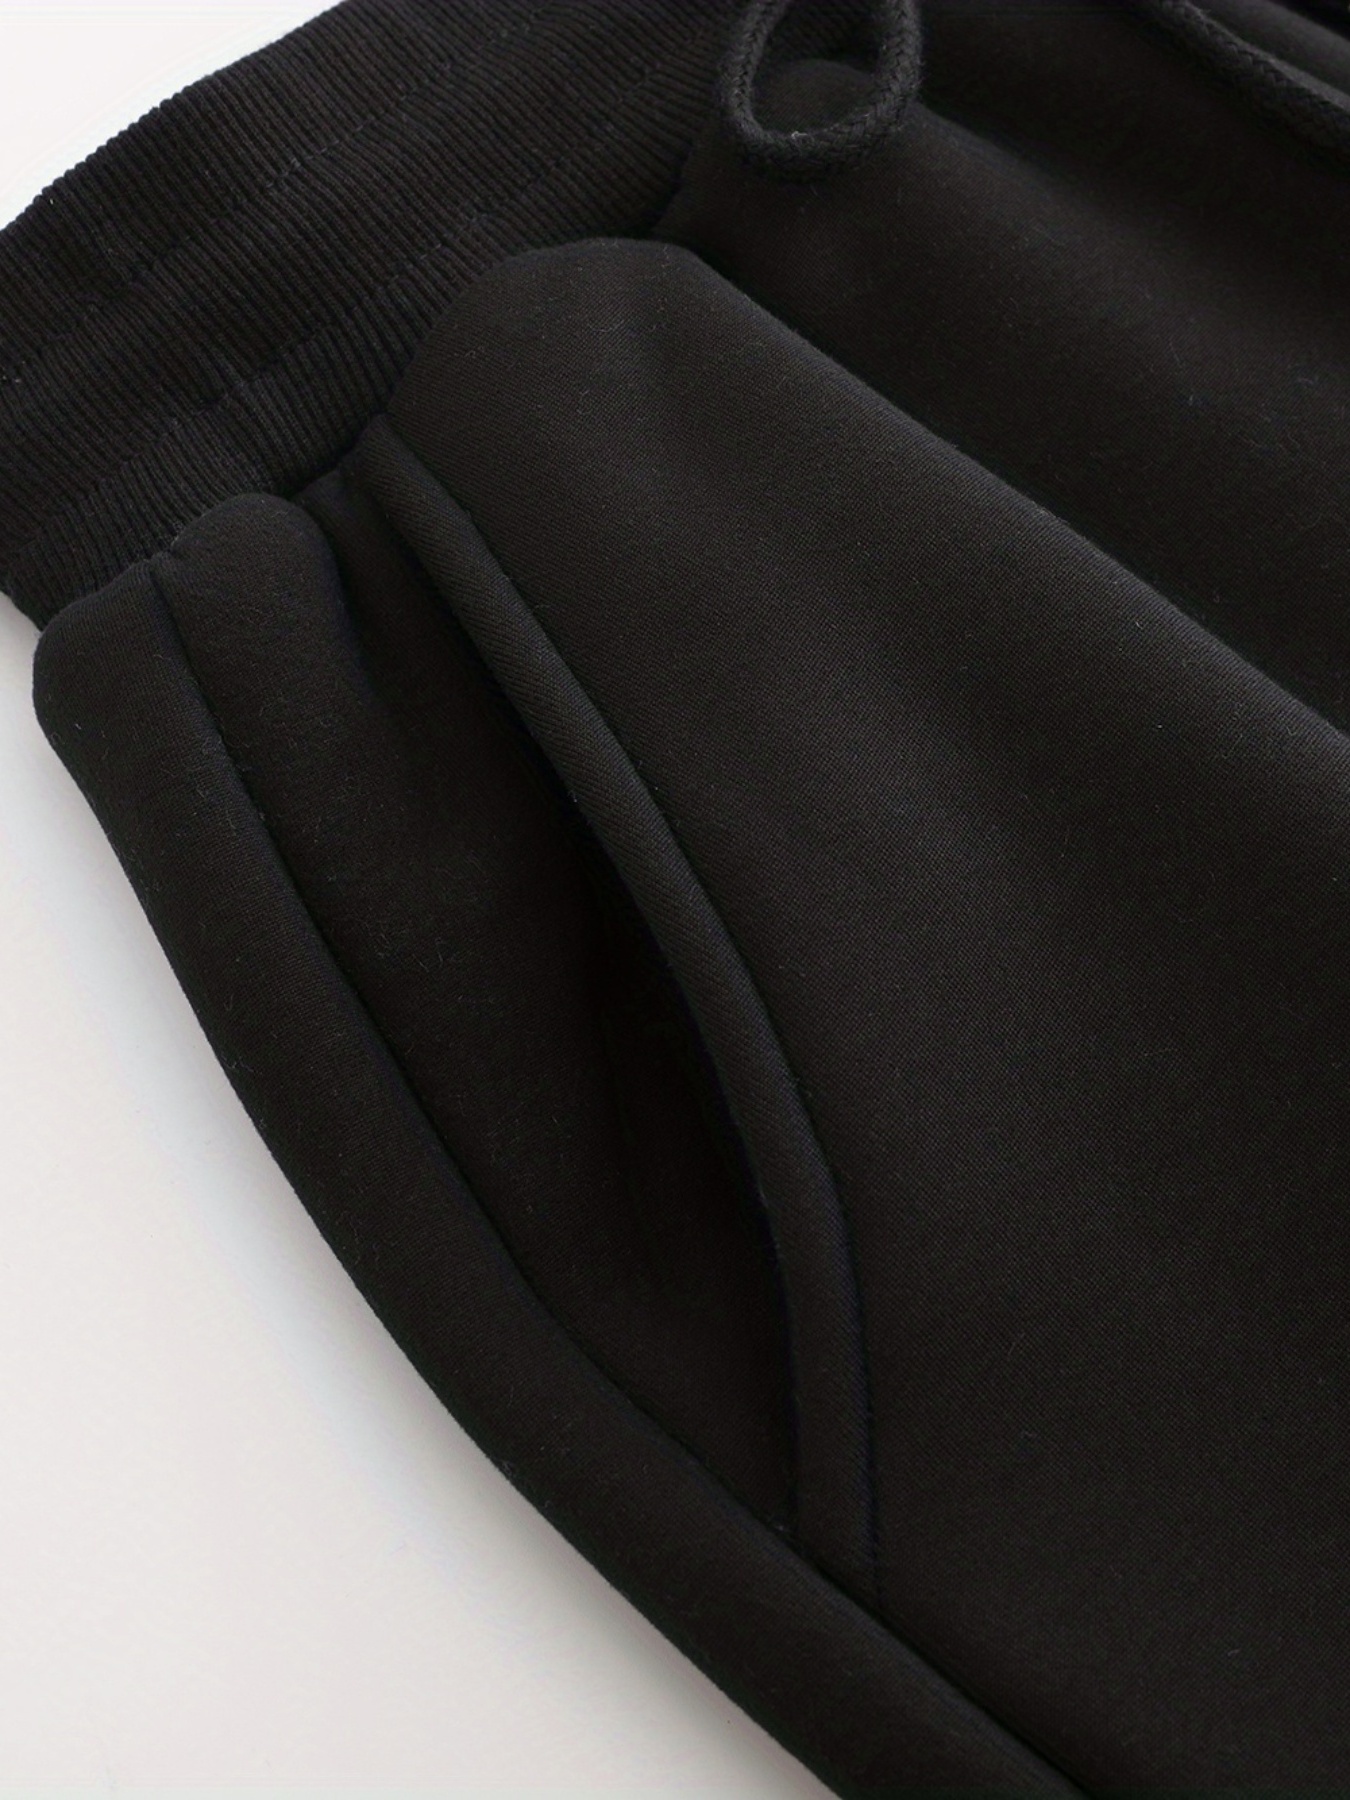 plush thermal pants, winter plush thermal pants casual drawstring pocket pants womens clothing details 23